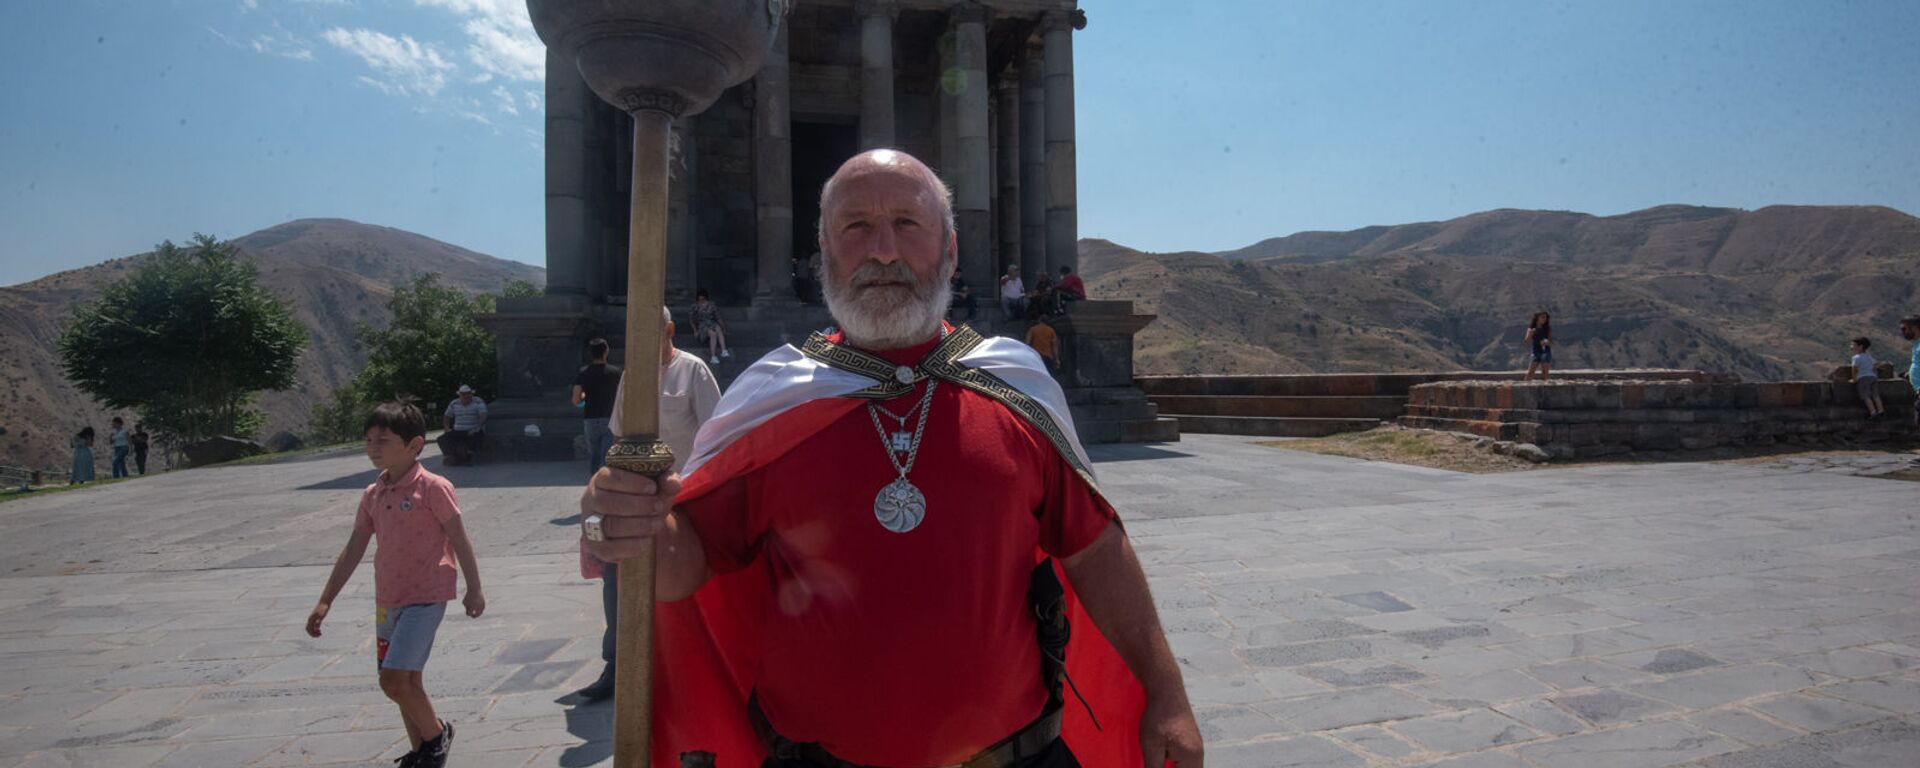 Жрец Варуж Агаджанян во время празднования Навасарда около храма Гарни (11 августа 2020). - Sputnik Армения, 1920, 11.08.2020